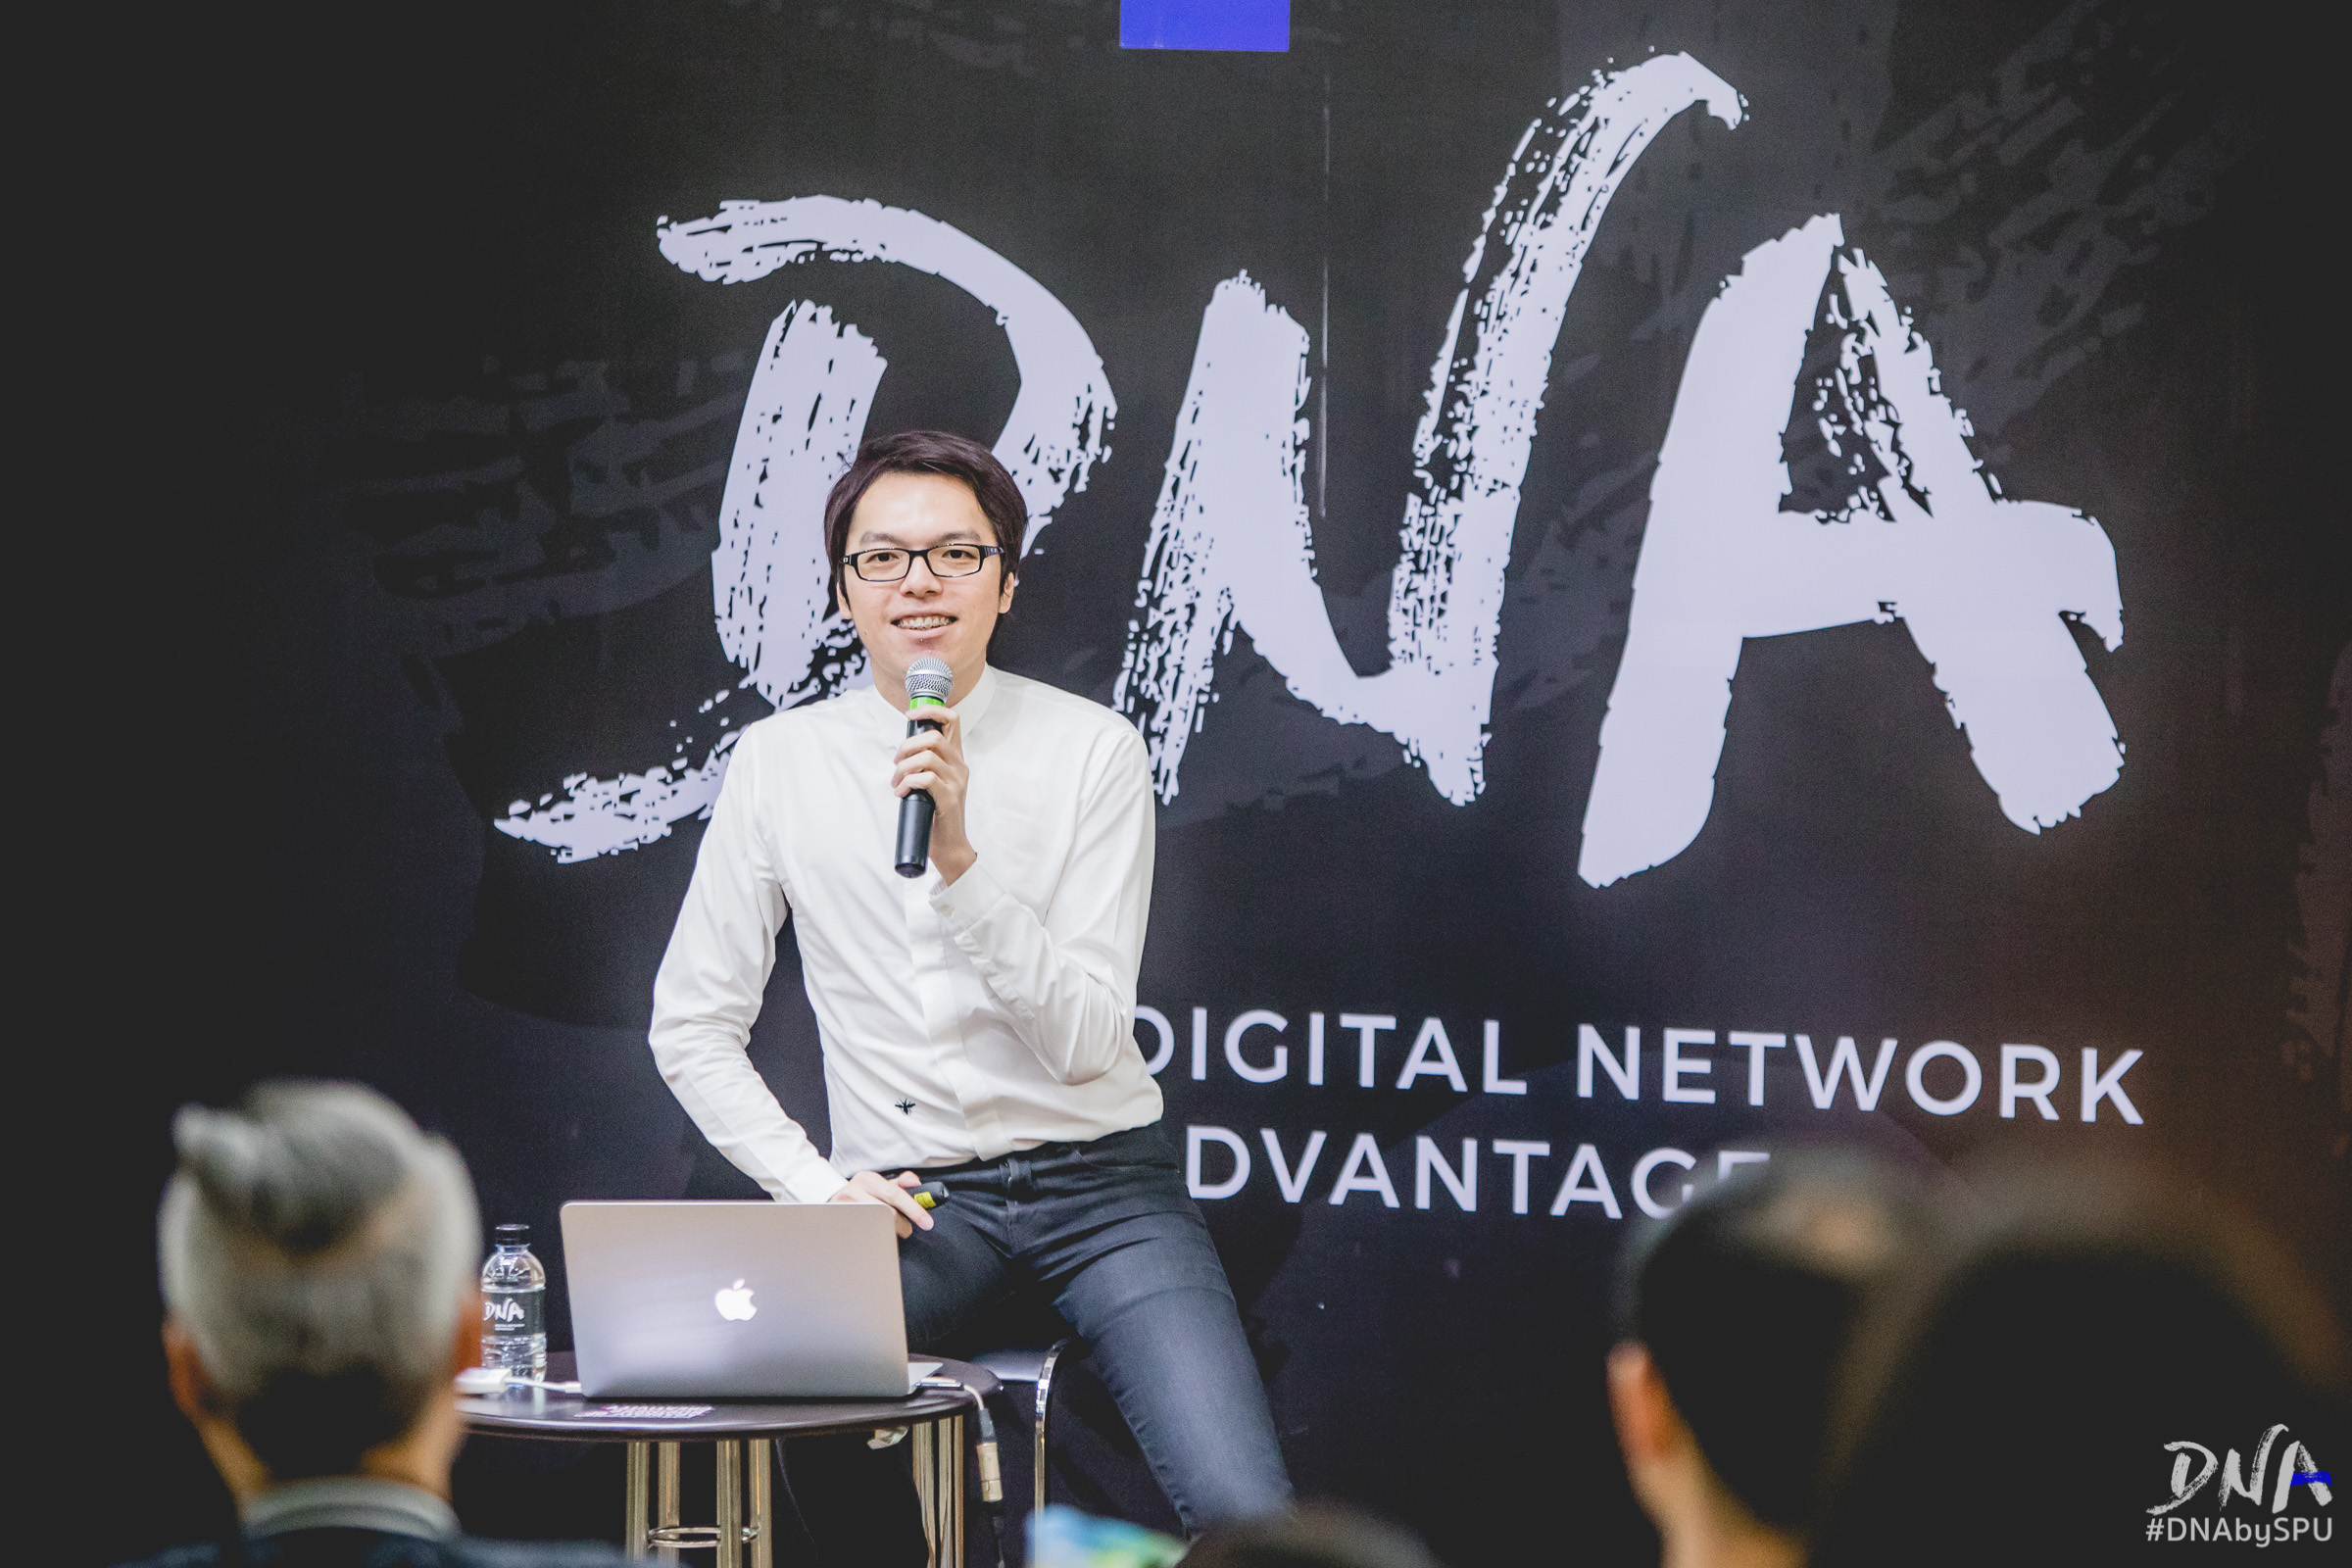 #DNAjournal EP.19 #DNAbySPU [Simplify complexity :: เปลี่ยนสิ่งยุ่งยาก… ให้เข้าใจง่าย] ดร.ยุทธนา ศรีสวัสดิ์ Co-founder and Tax Specialist, iTAX Thailand